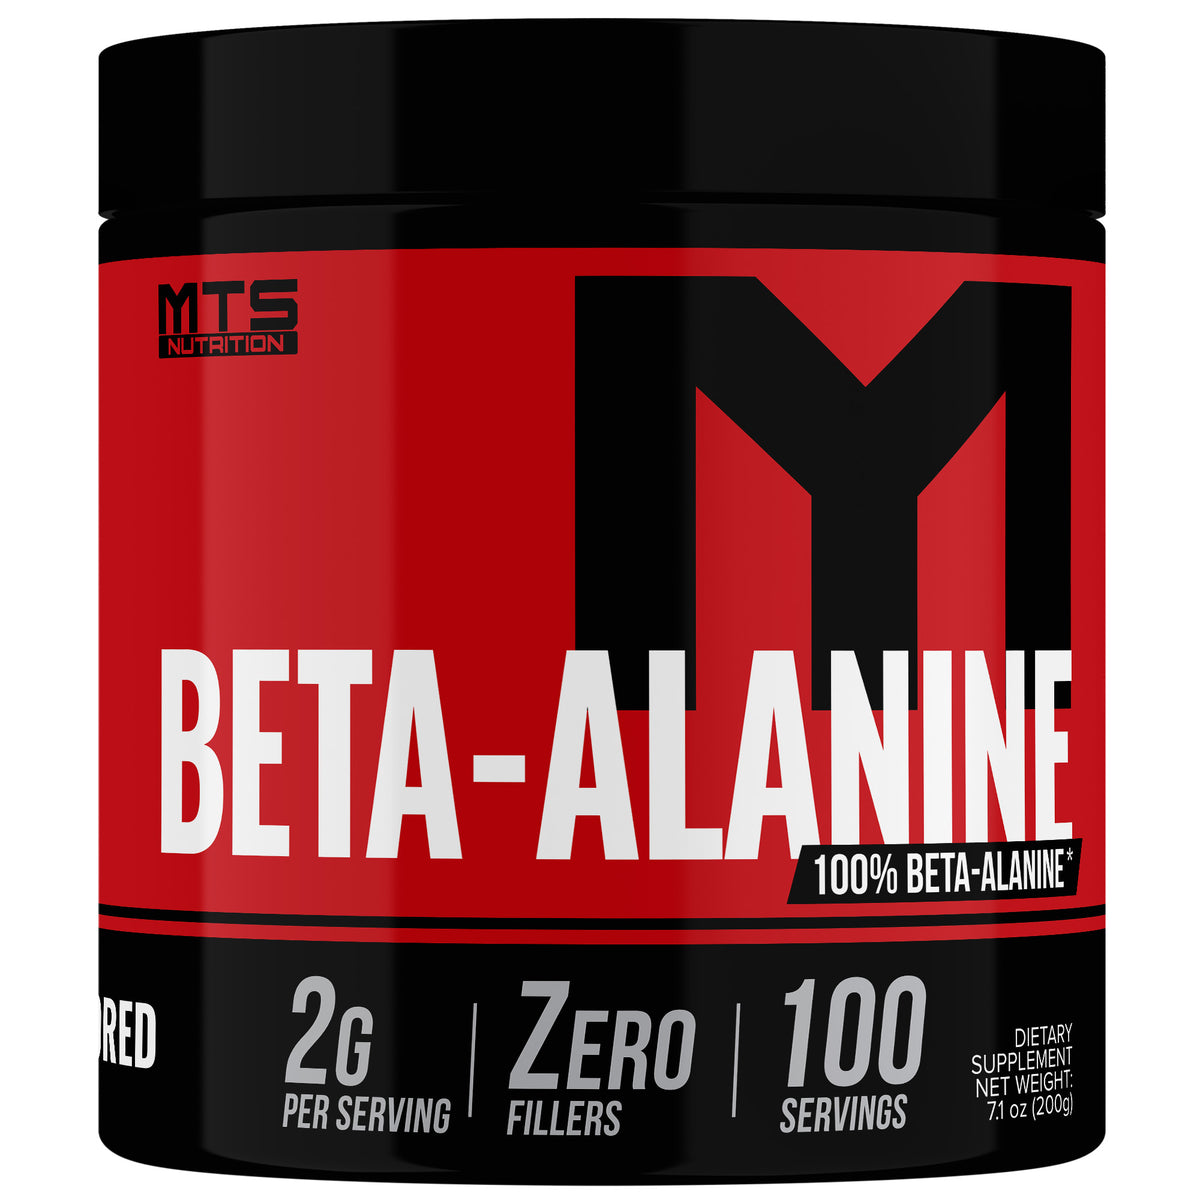 Beta alanine supplementation